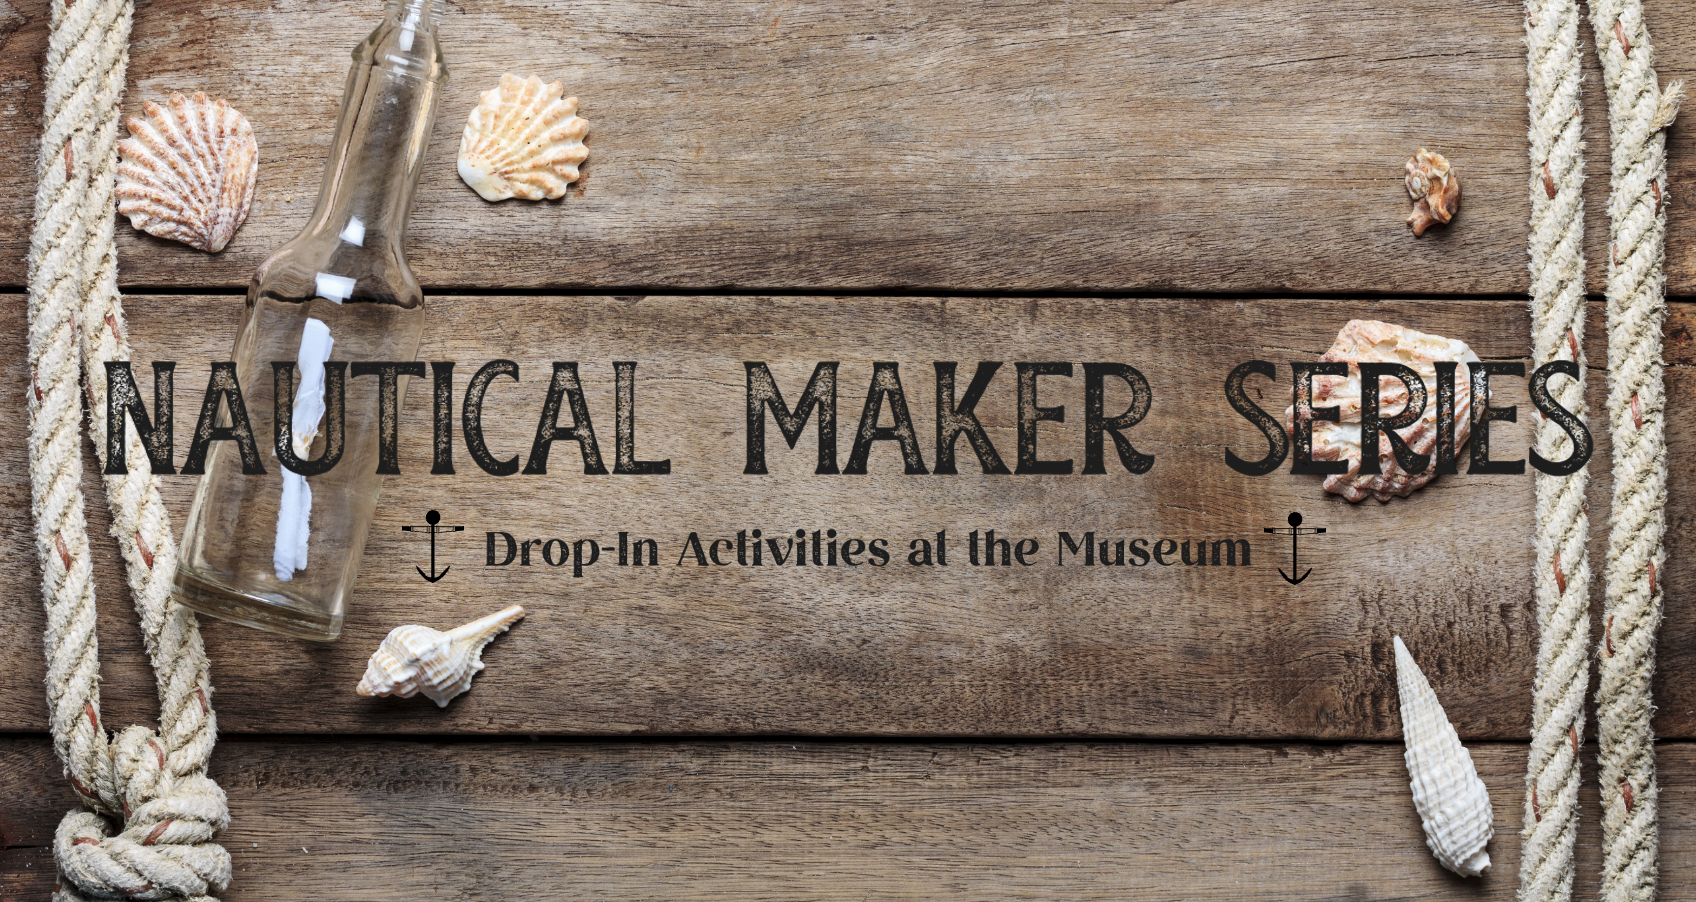 Nautical Maker Series